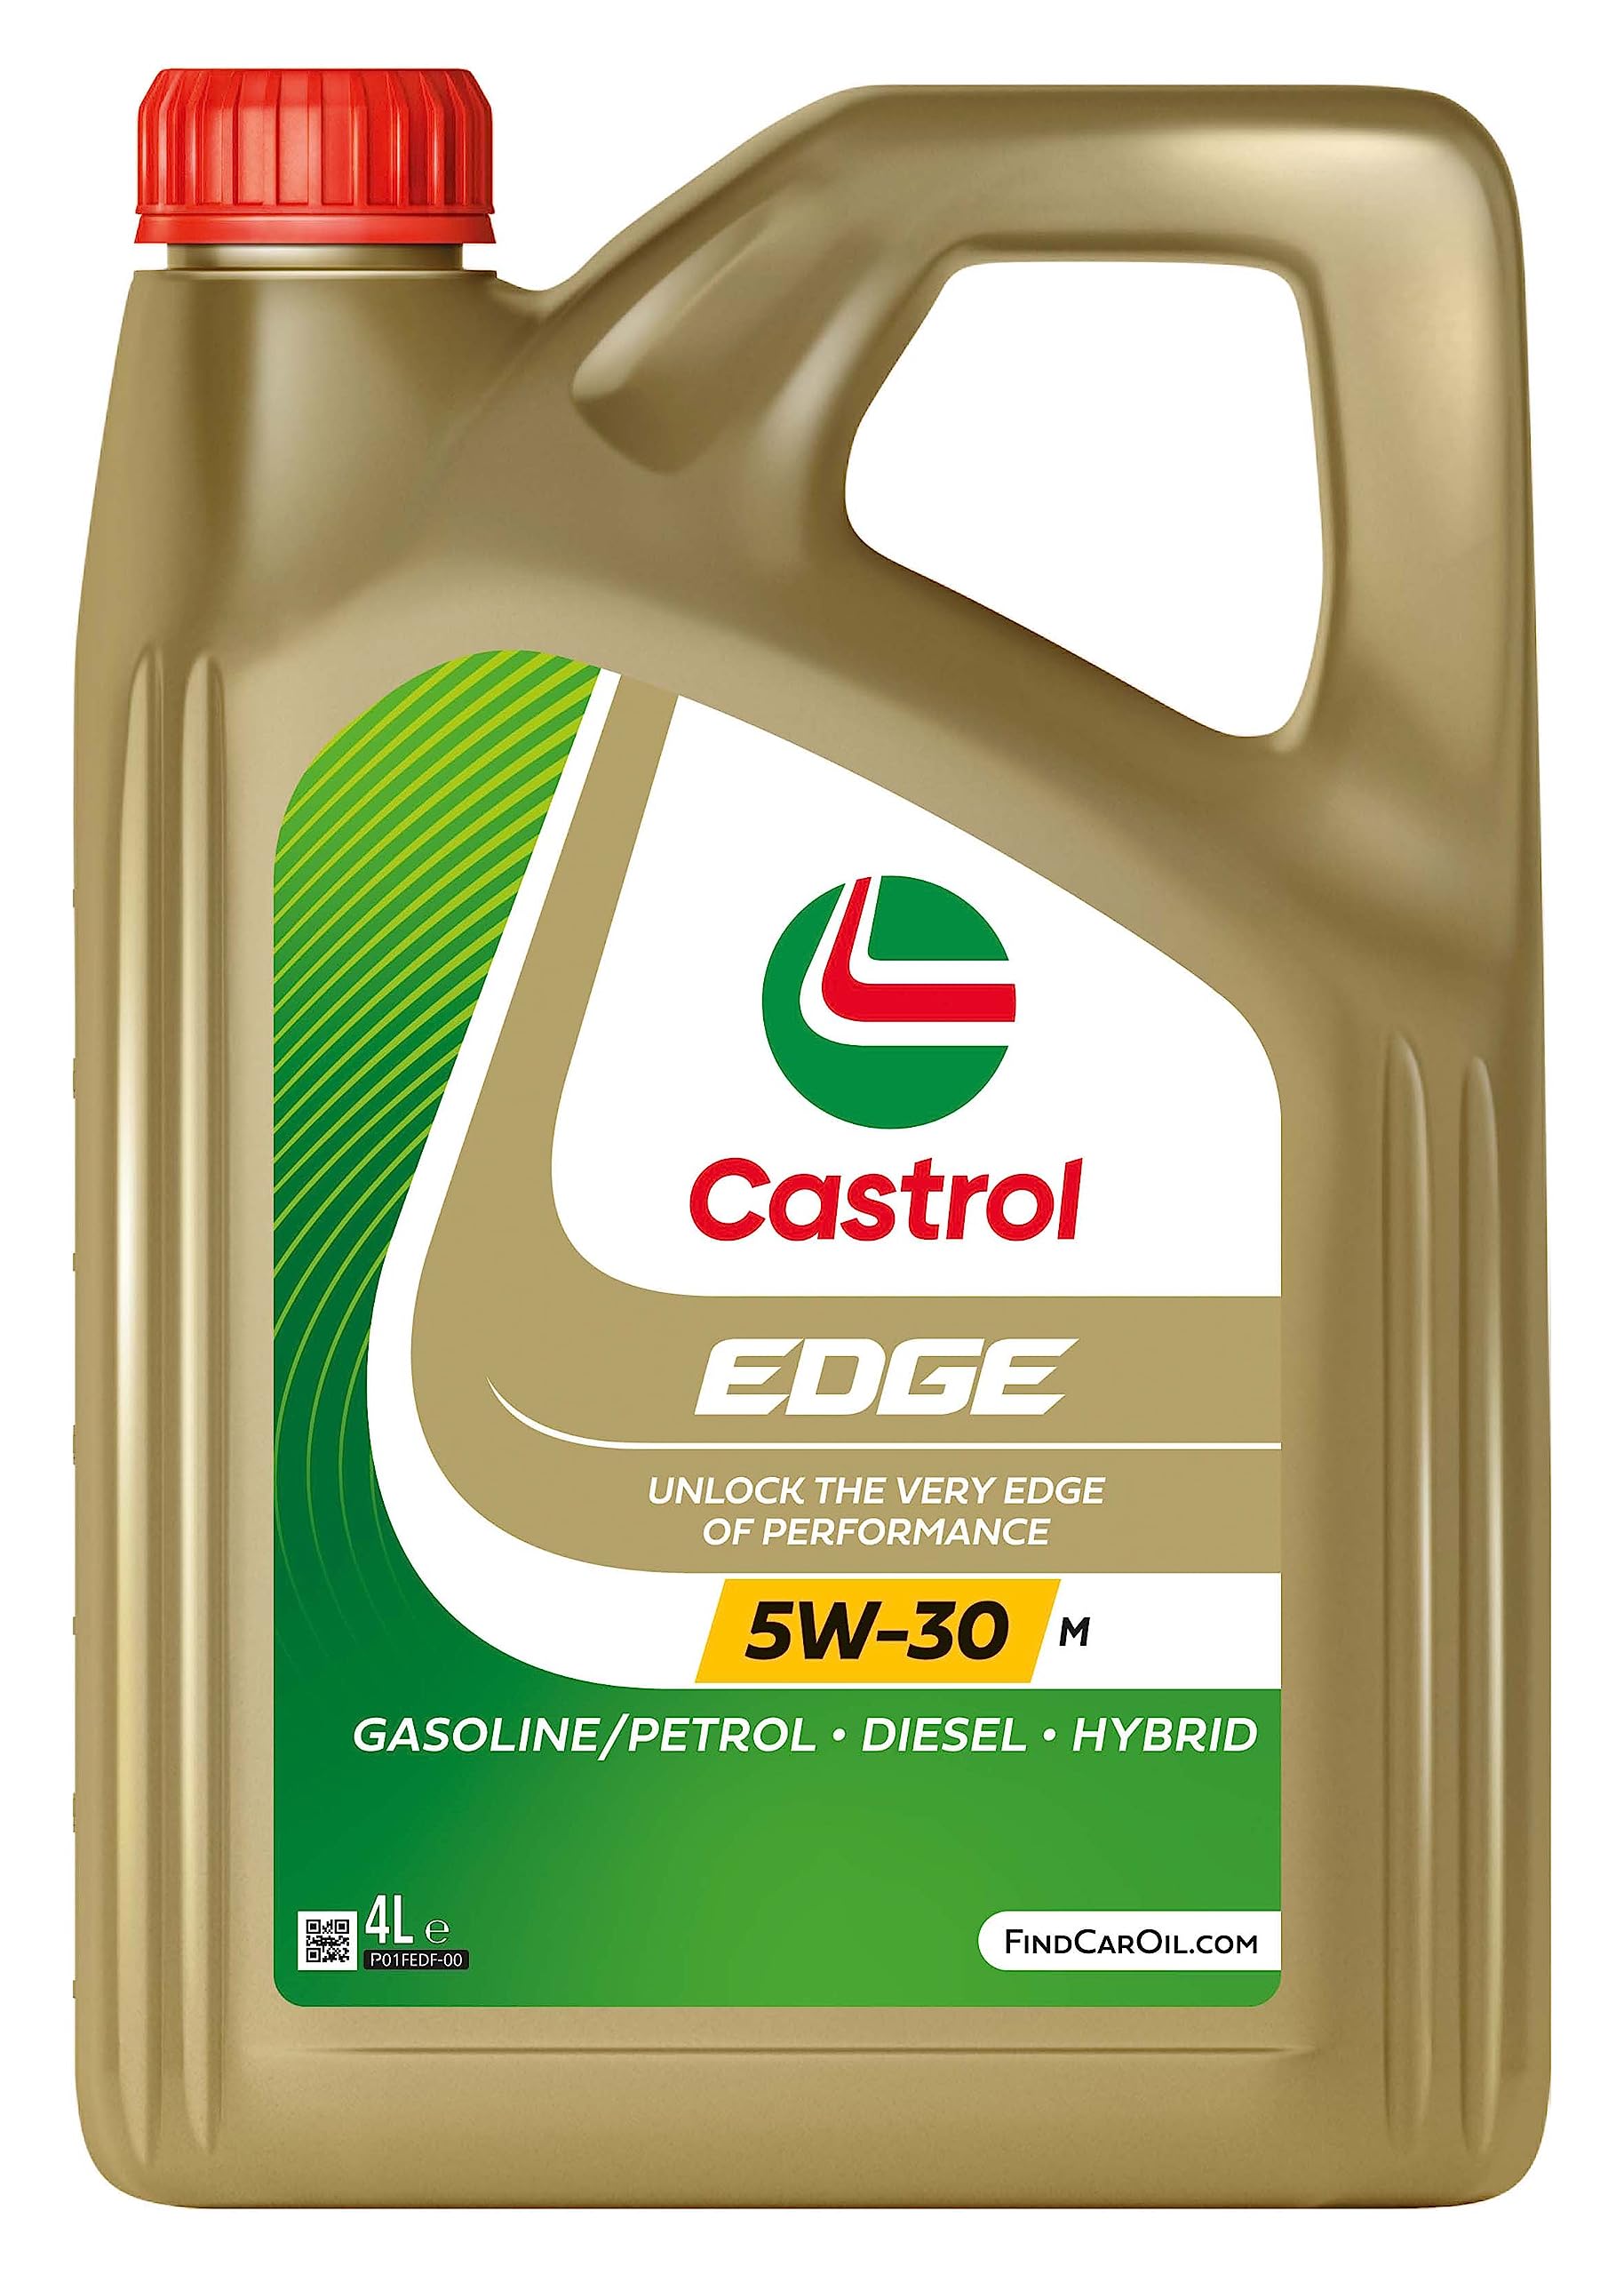 Castrol EDGE 5W-30 M Motoröl, 4L von Castrol